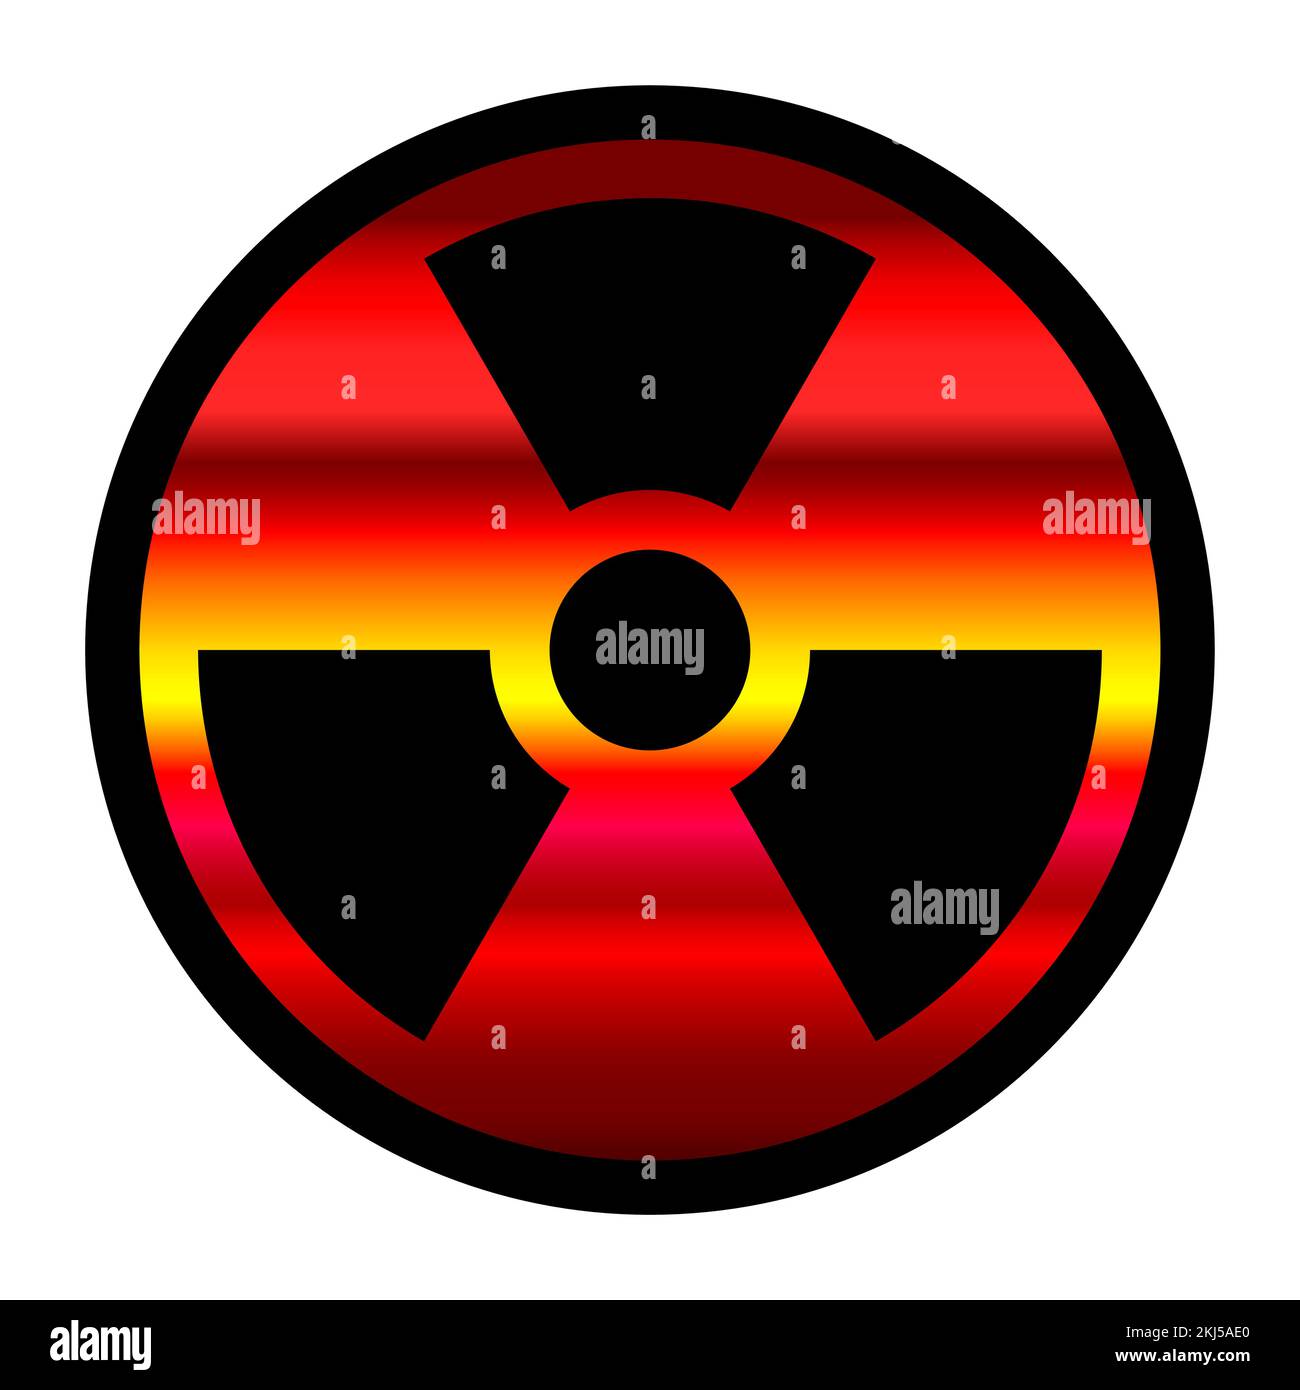 Illustration of an abstract radioactivity warning sign Stock Vector